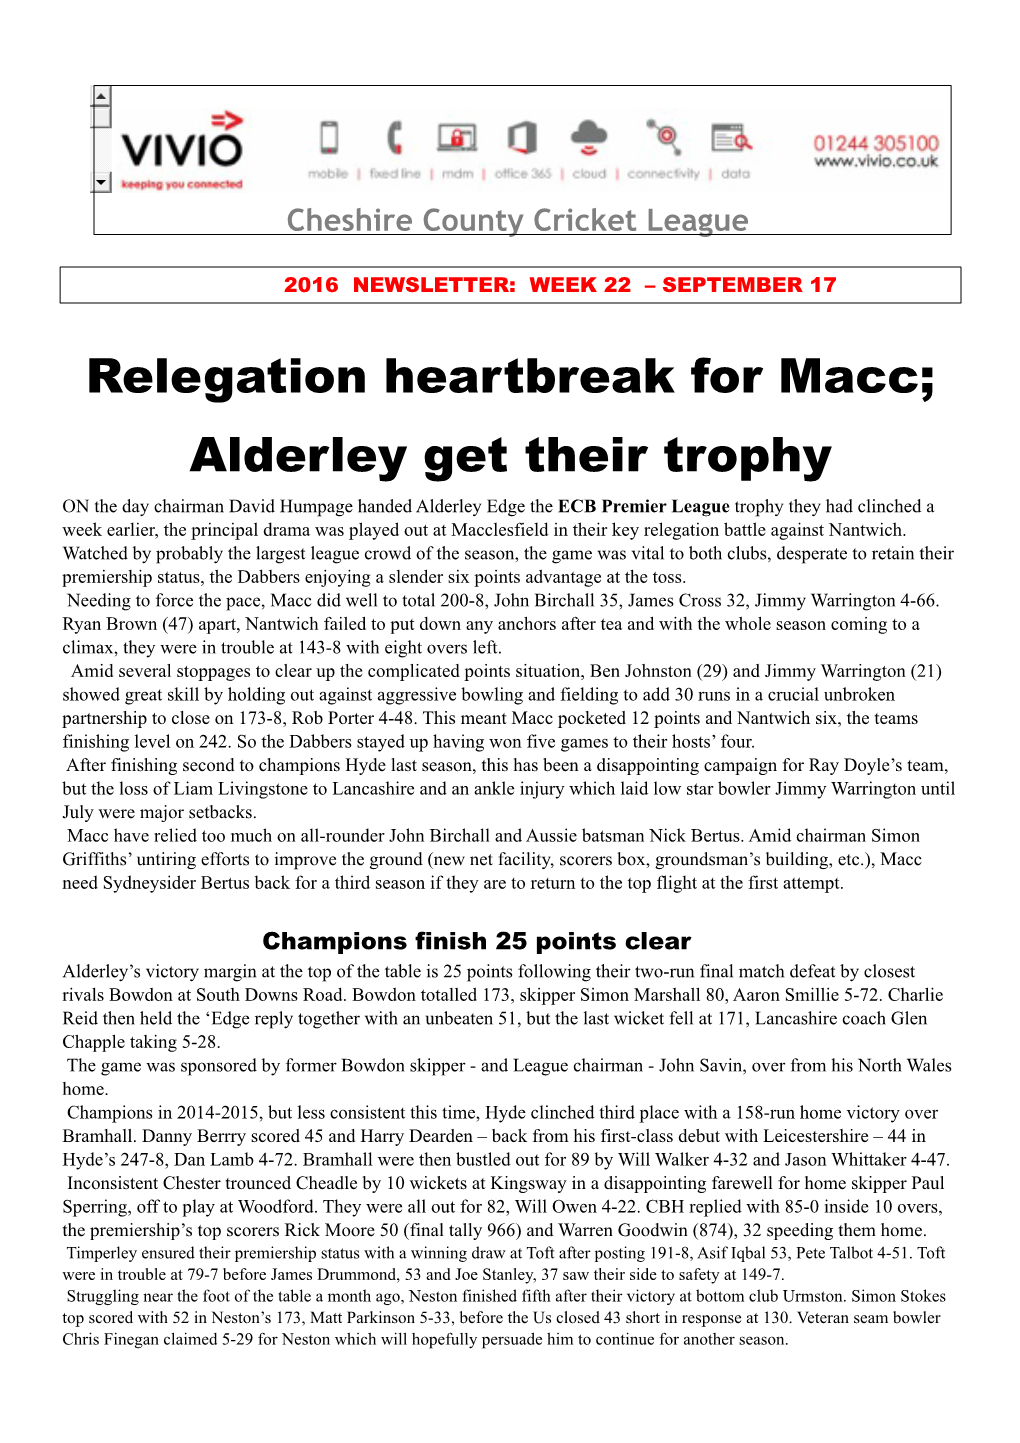 Relegation Heartbreak for Macc; Alderley Get Their Trophy